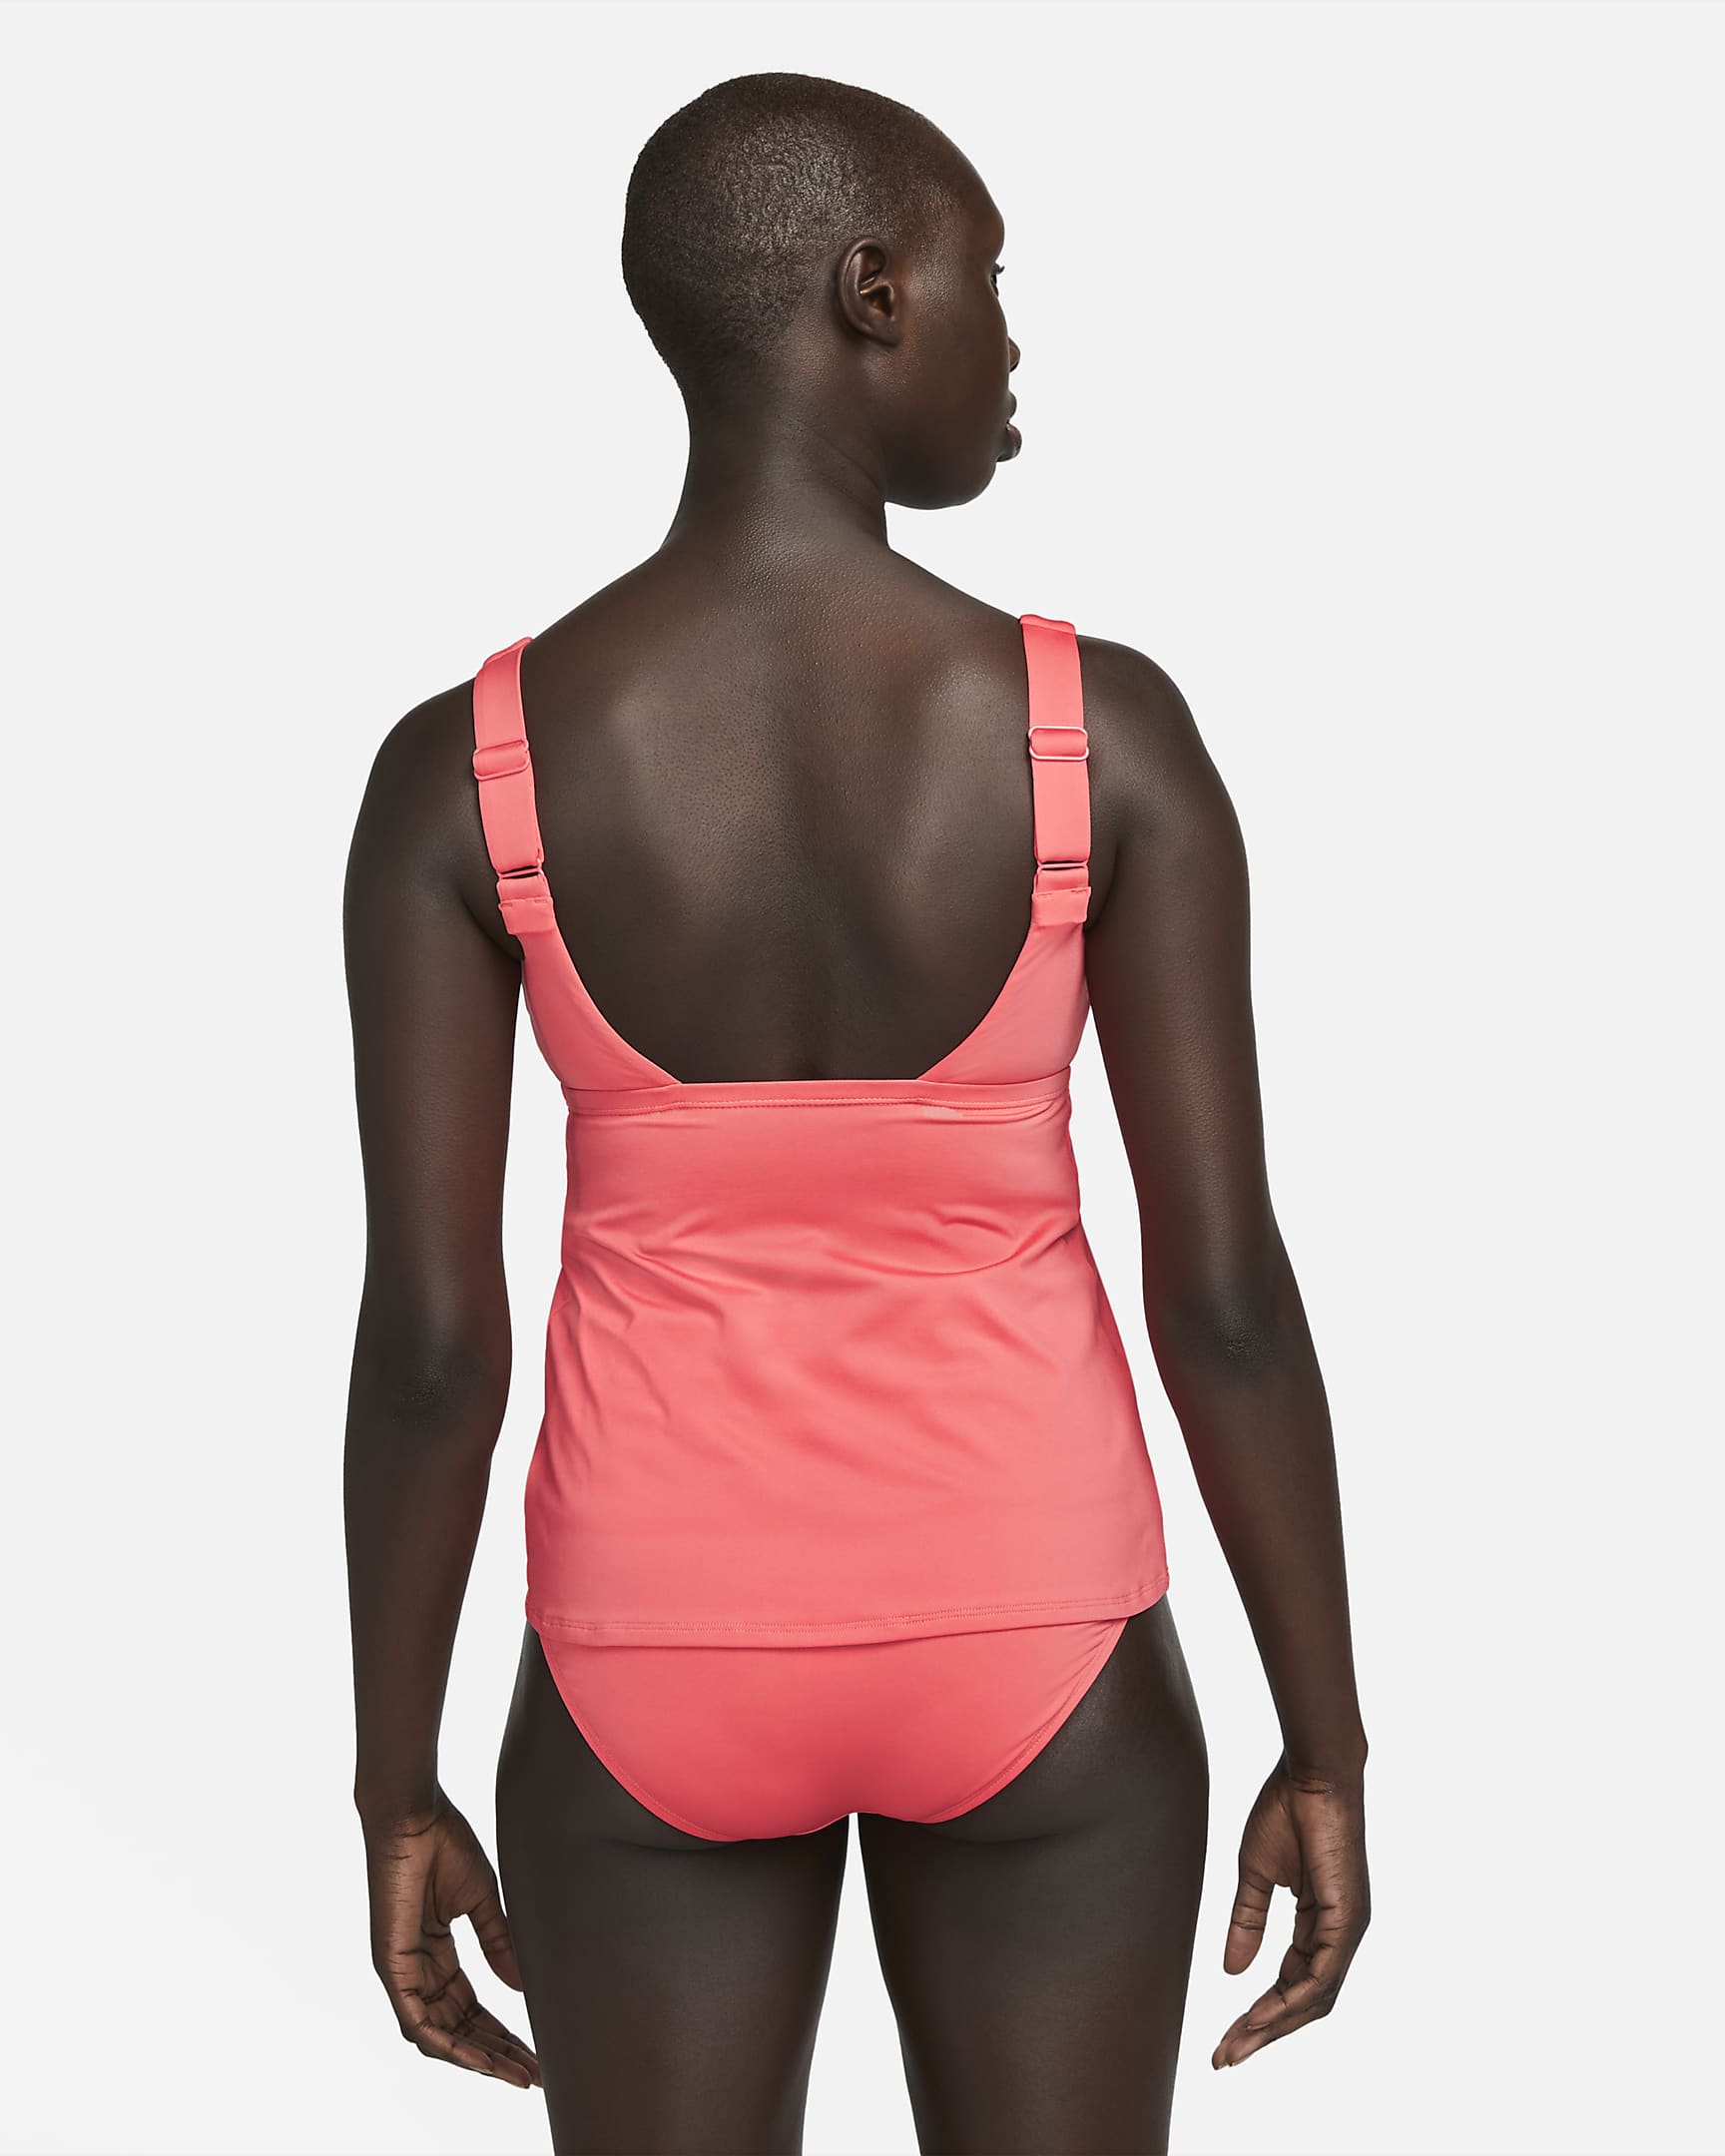 Nike Tankini Women's Swimsuit Top. Nike.com